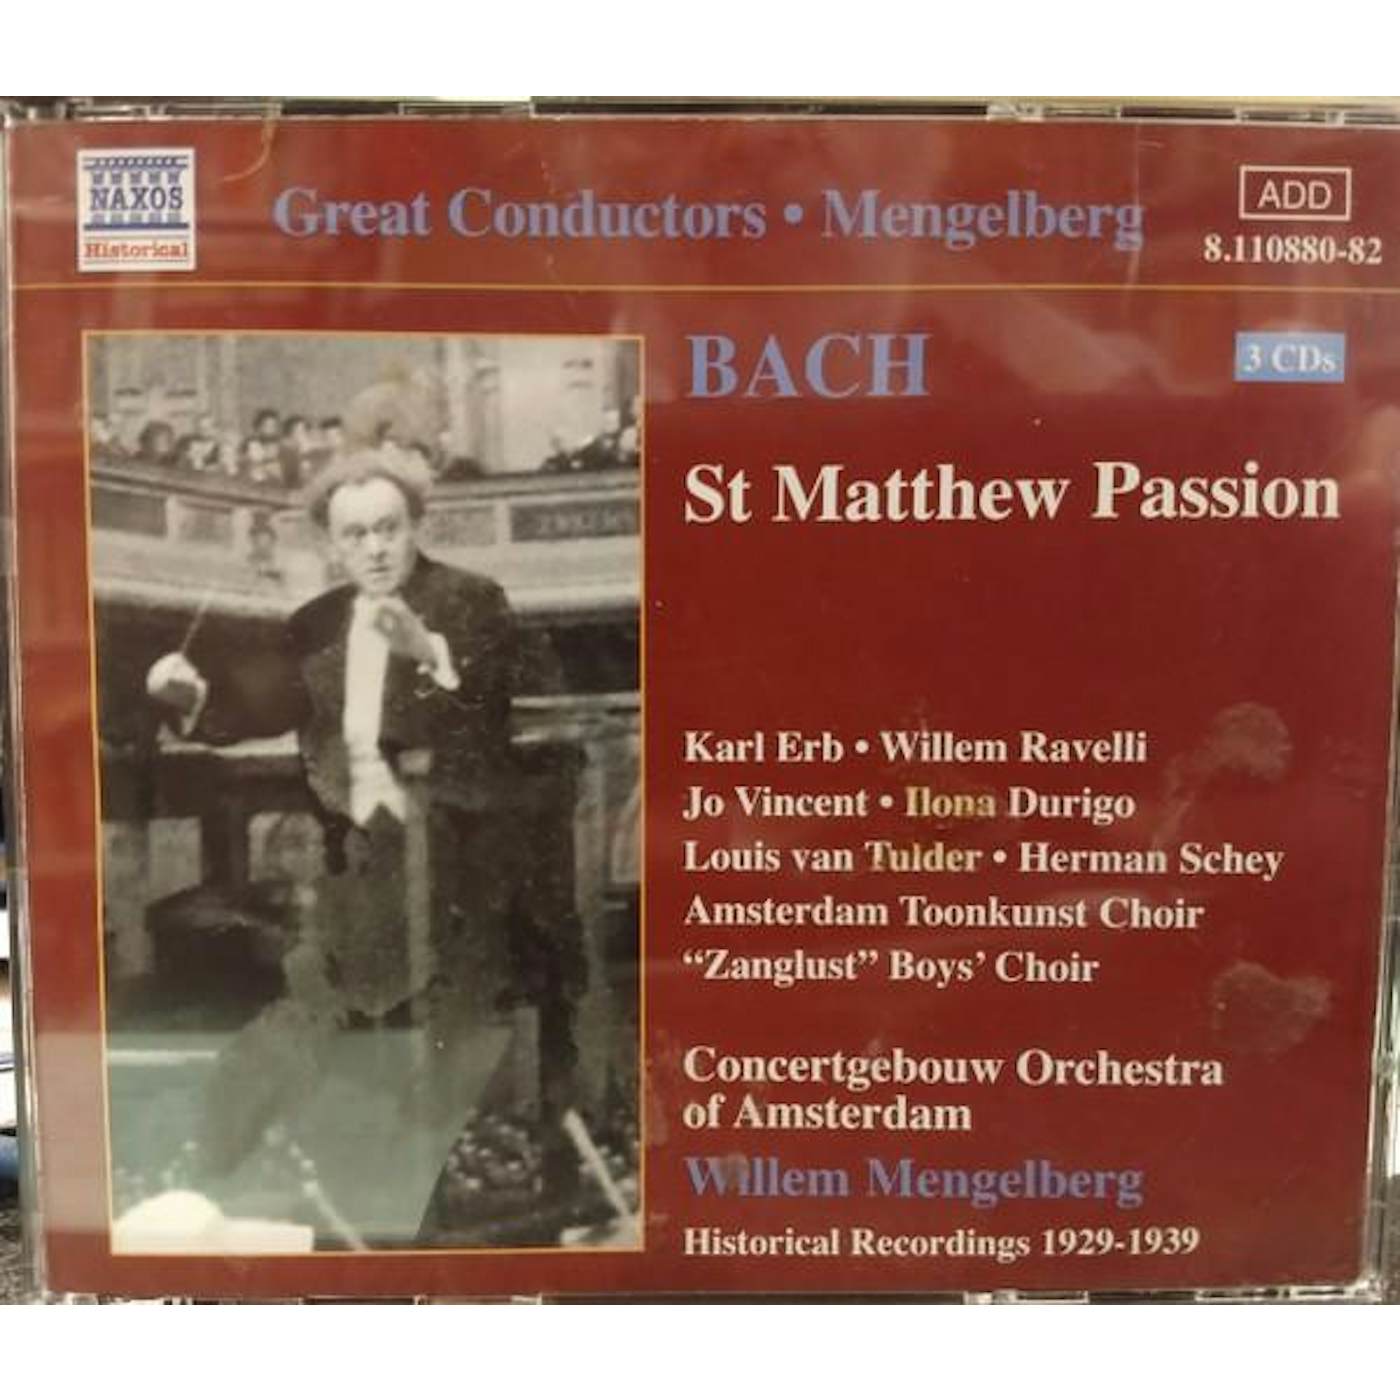 Johann Sebastian Bach ST. MATTHEW PASSION (MENGELBERG, CONCERTGEBOUW ORCHESTRA) CD